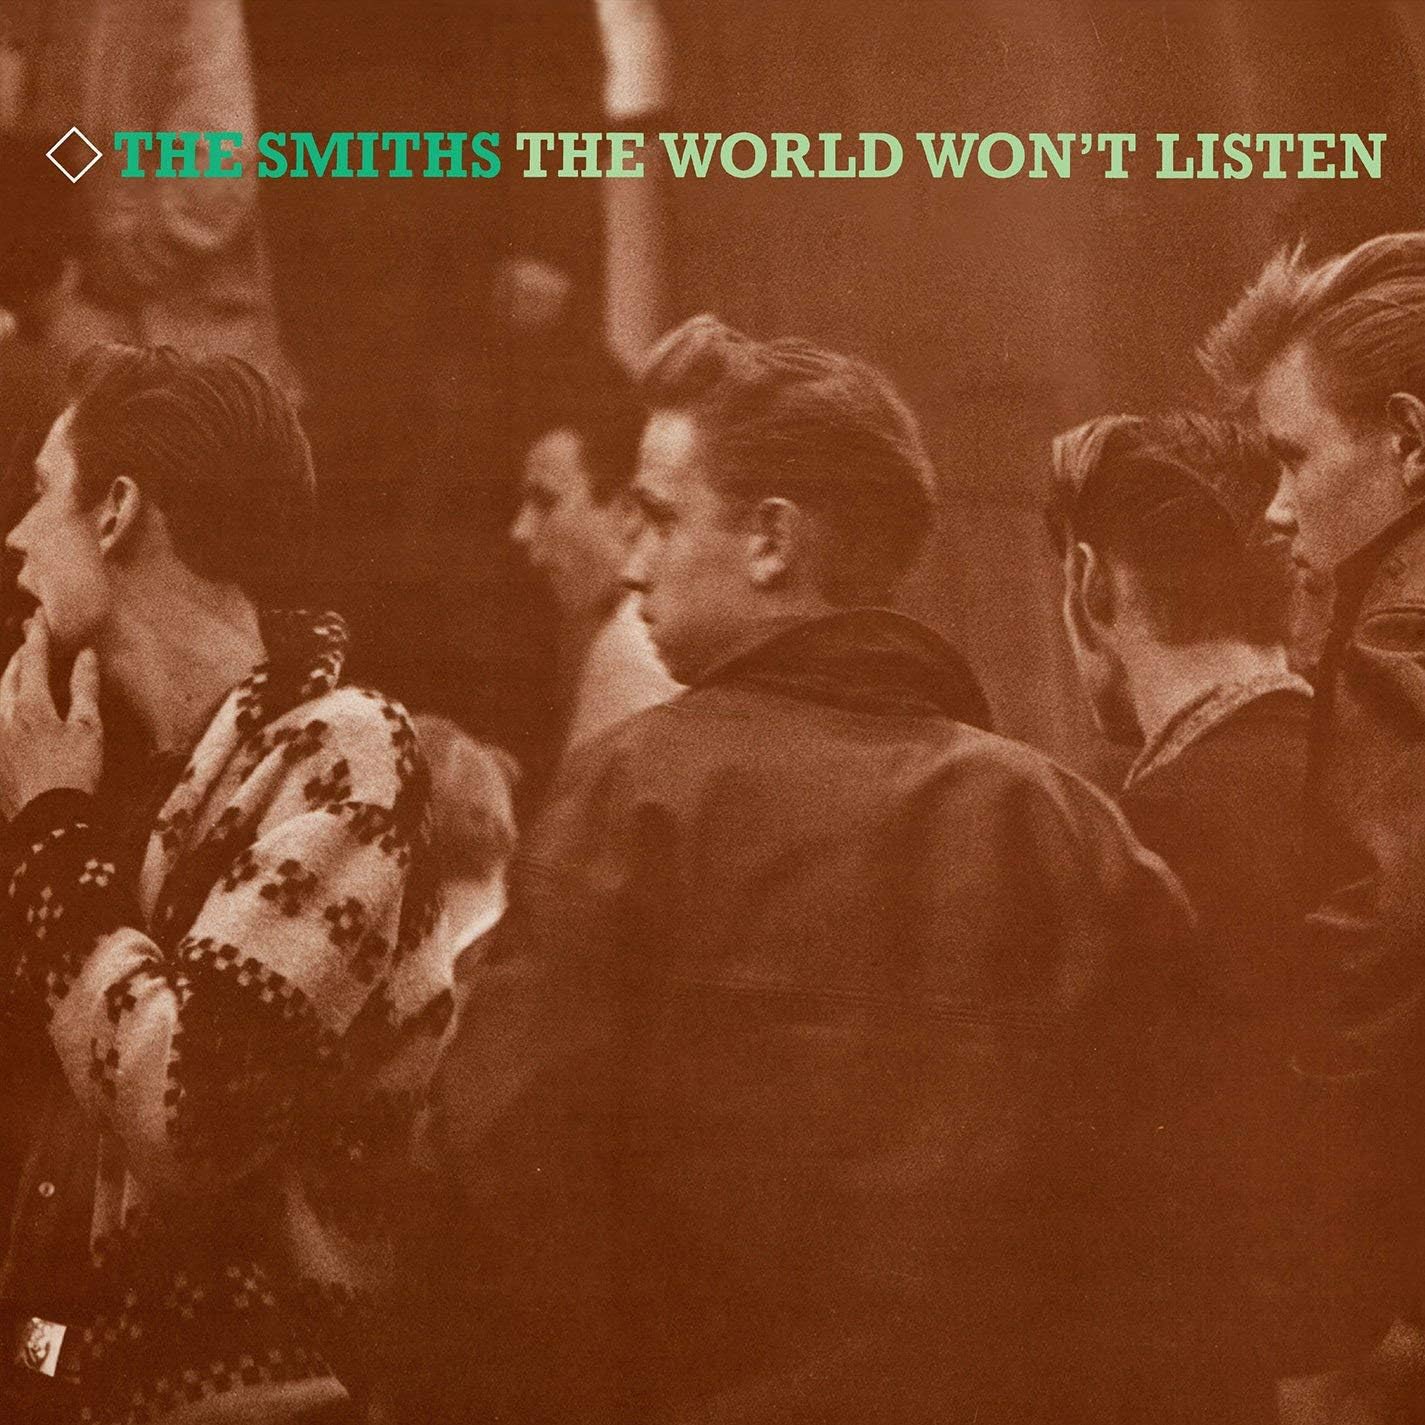 The SMITHS 'THE WORLD WON'T LISTEN'